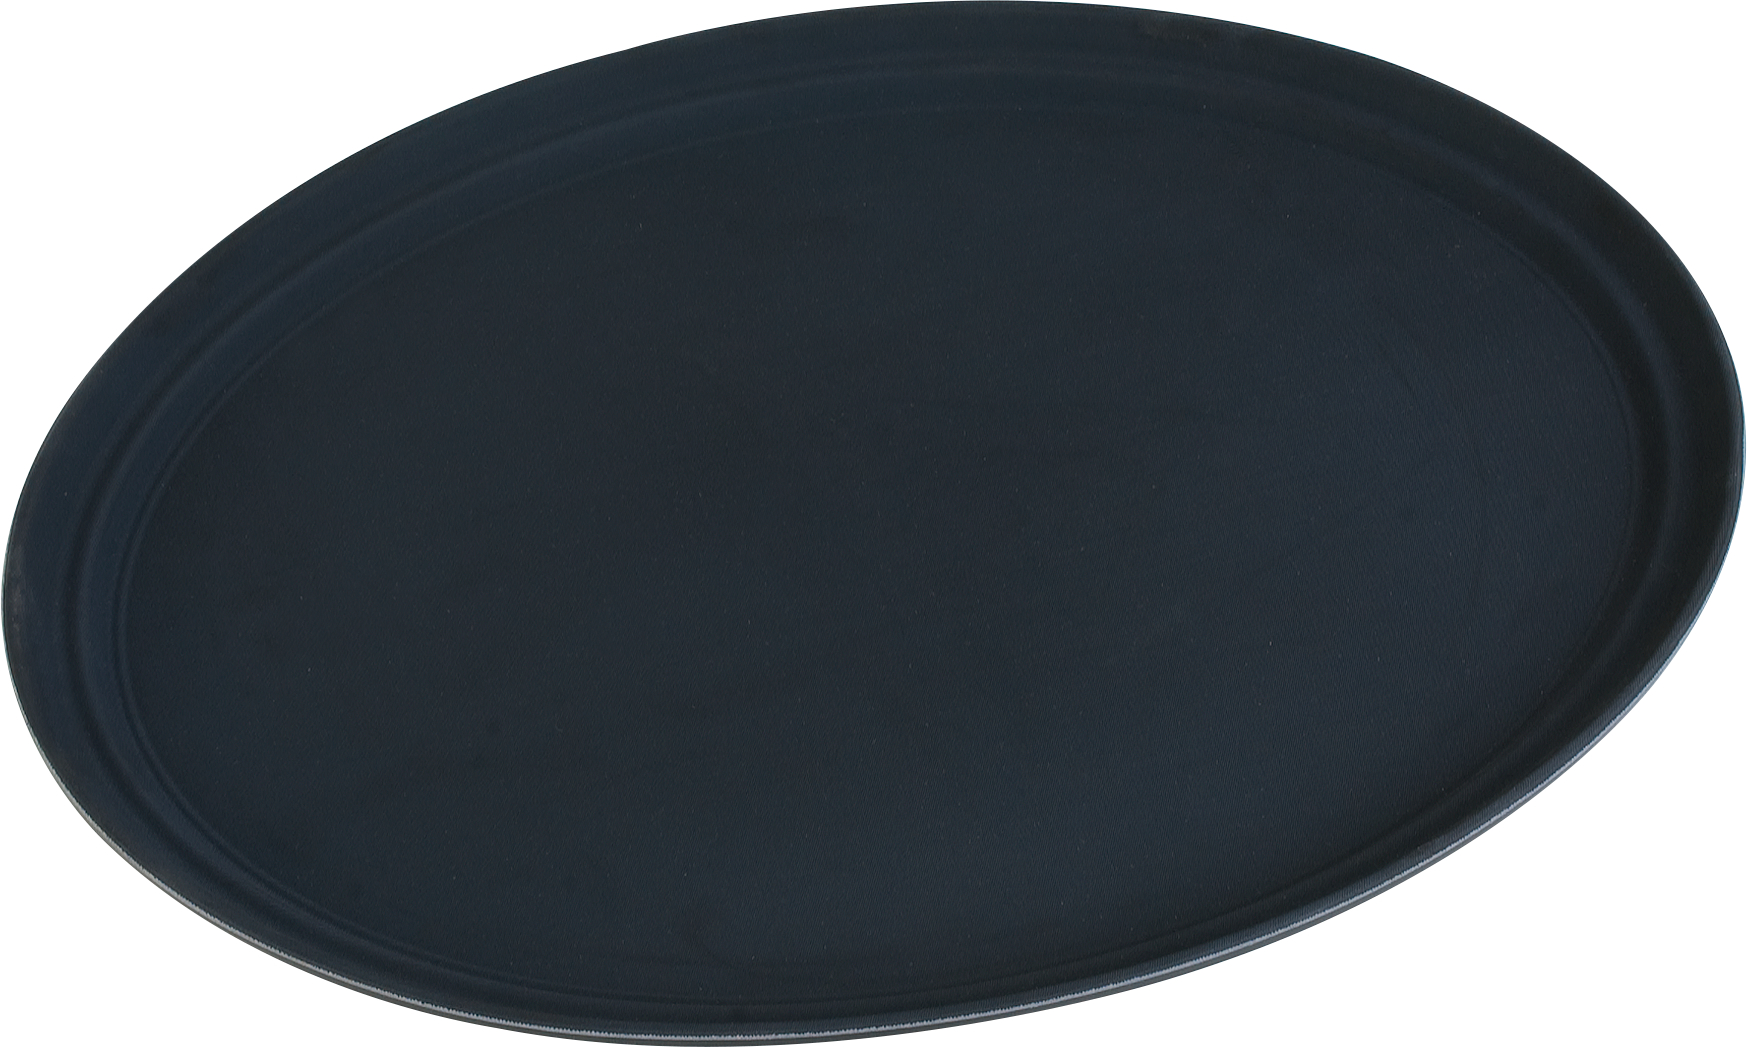 Truebasics Oval Grip Tray 29 x 23.5 - Black